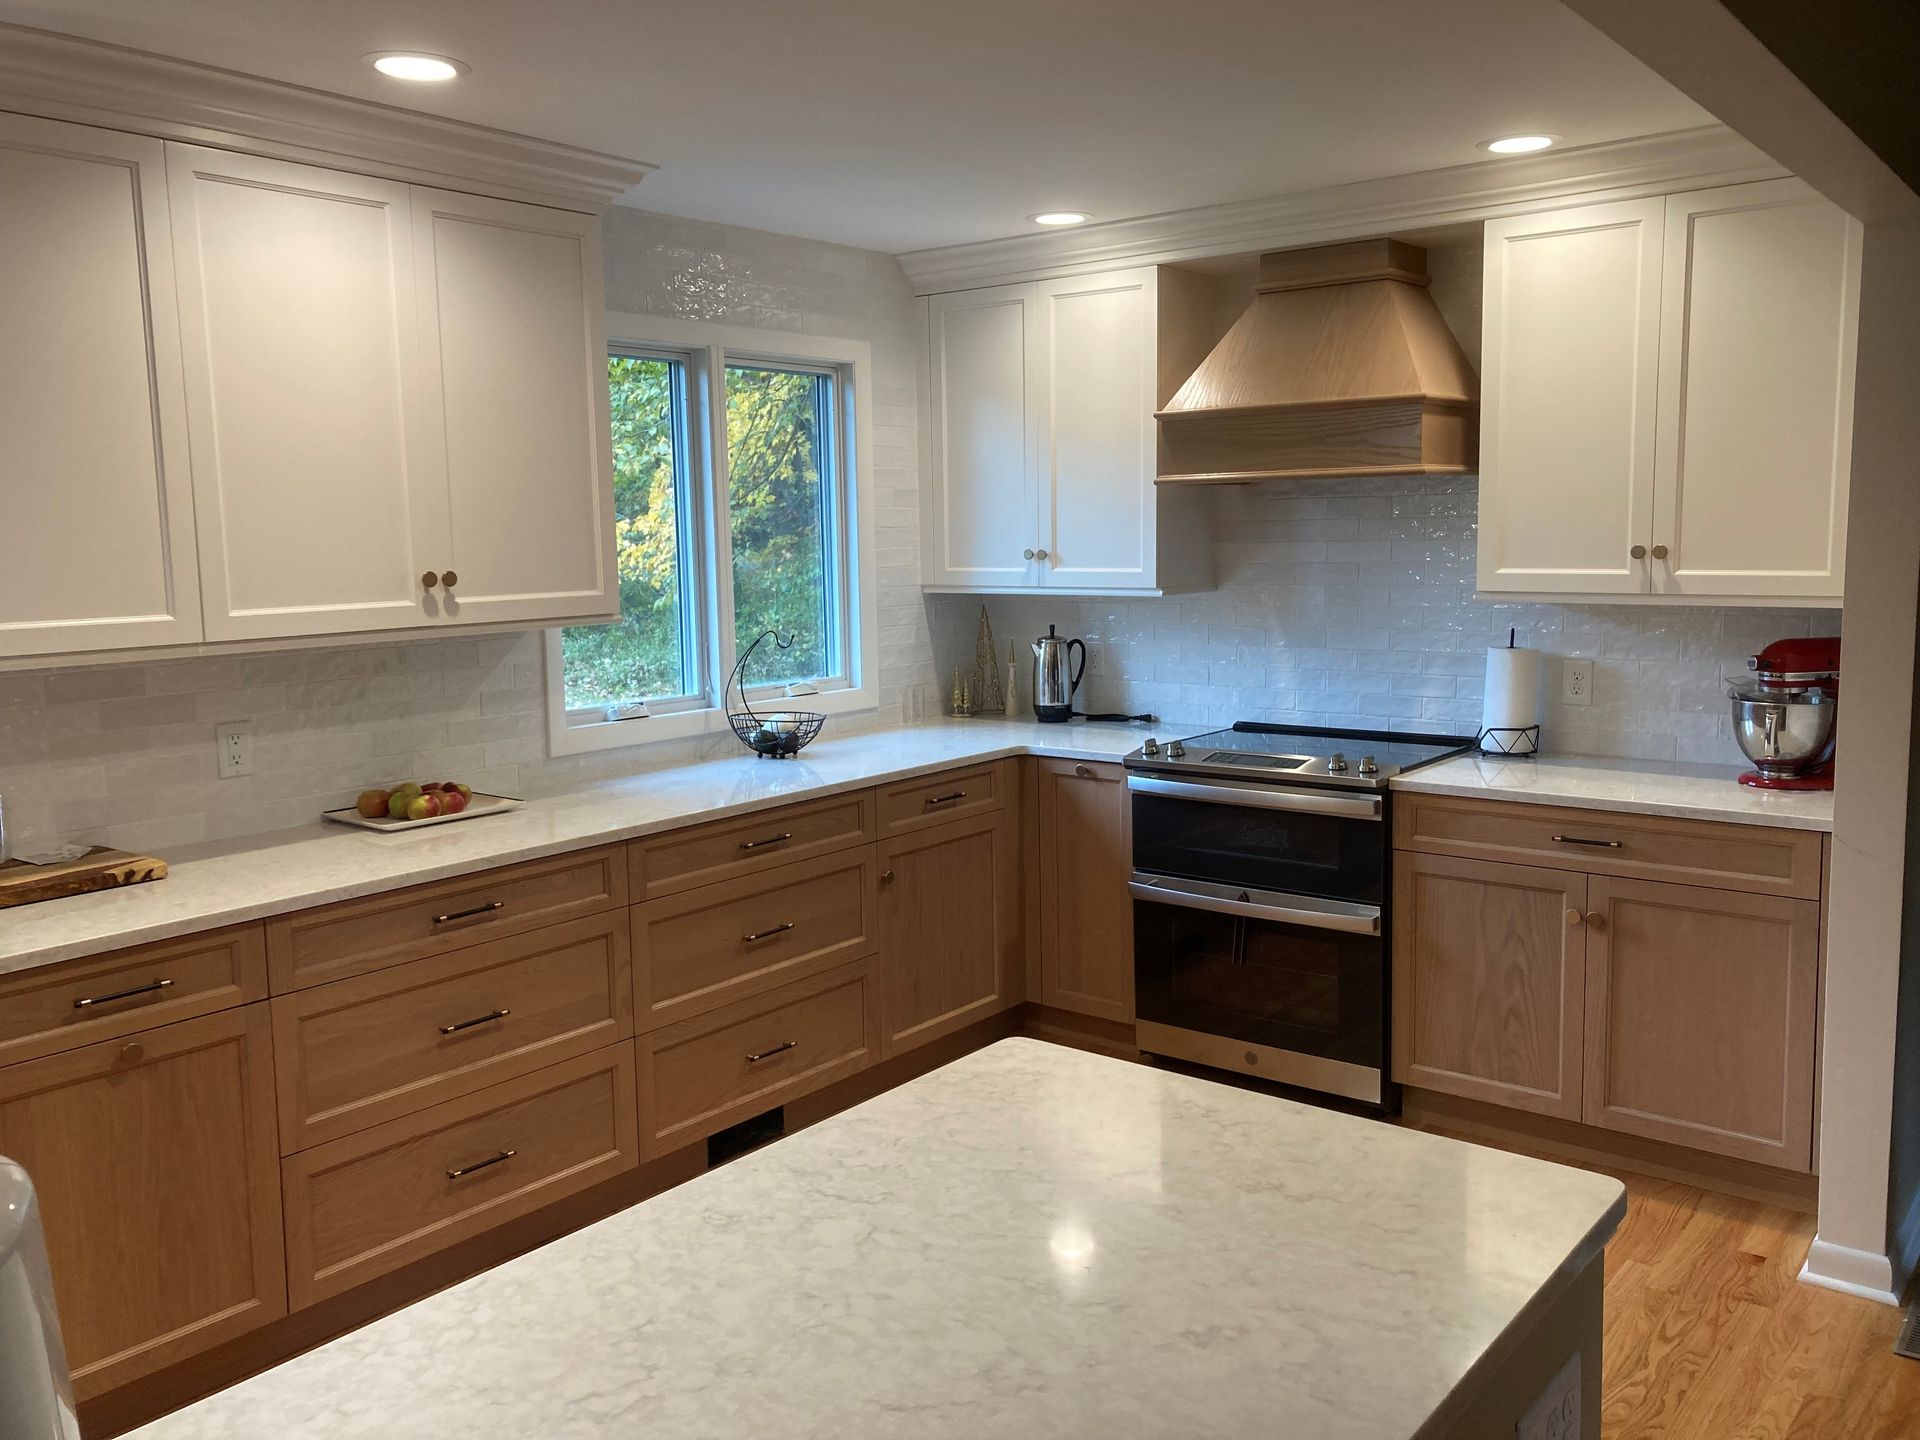 A busy kitchen – Guilford, CT - Red Door Kitchen & Bath Studio